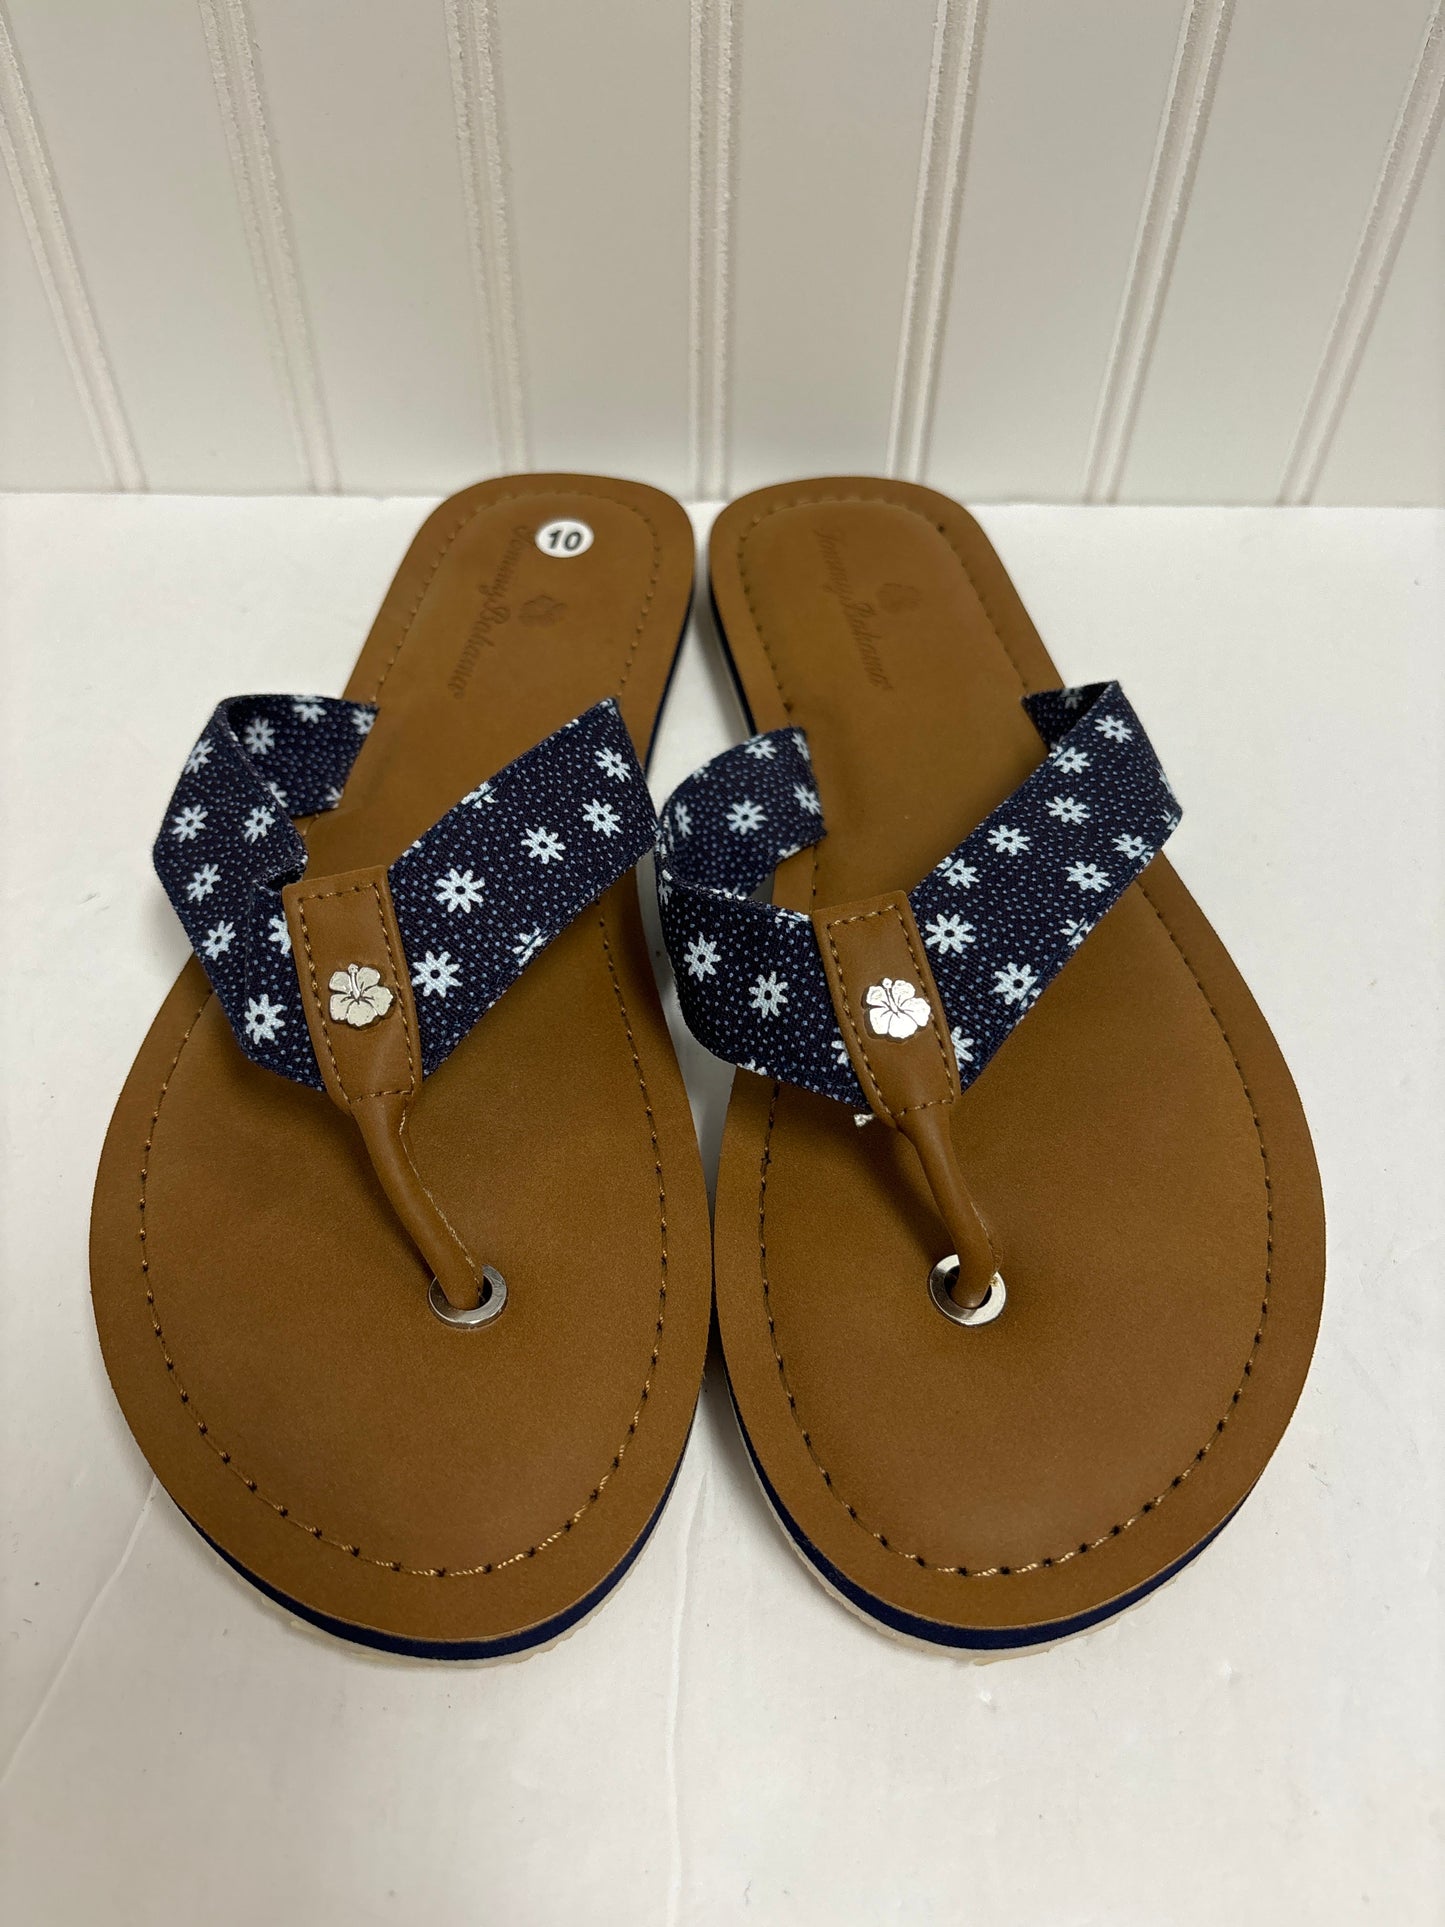 Blue Sandals Flip Flops Tommy Bahama, Size 10